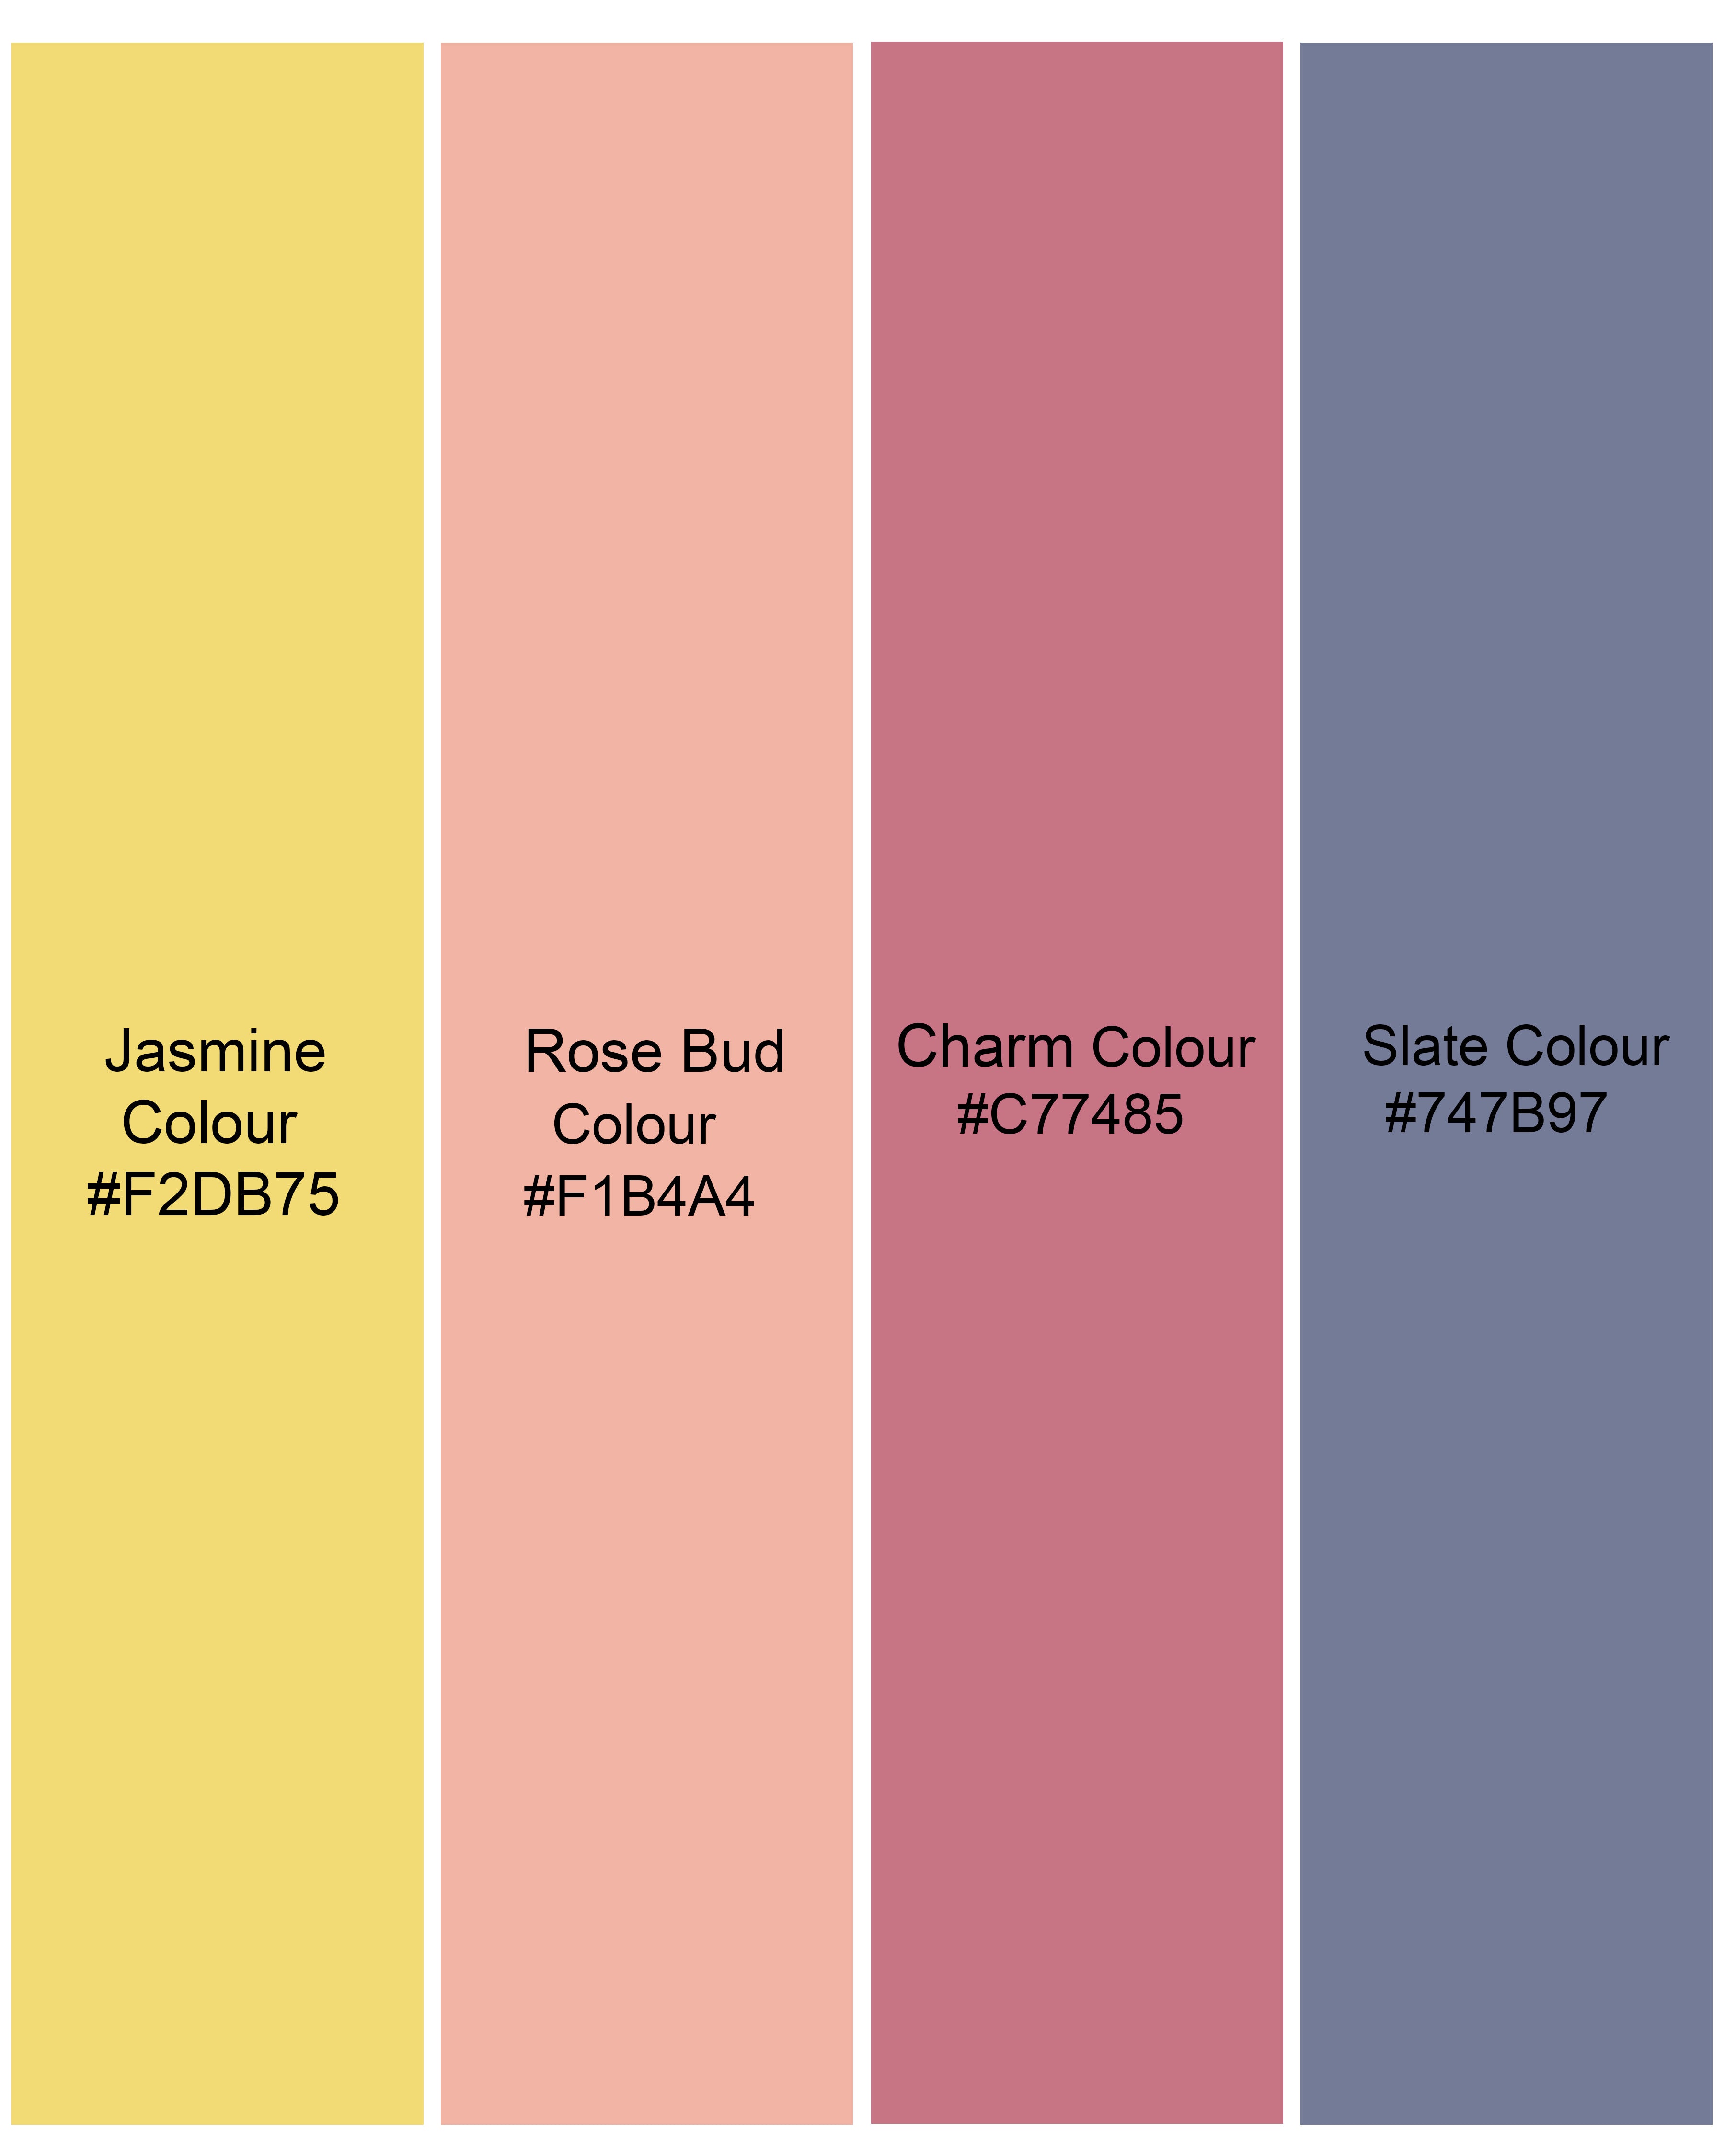 Jasmine Yellow with Rose Bud Pink Multicolour Striped Royal Oxford Shirt  8552-BD-38,8552-BD-H-38,8552-BD-39,8552-BD-H-39,8552-BD-40,8552-BD-H-40,8552-BD-42,8552-BD-H-42,8552-BD-44,8552-BD-H-44,8552-BD-46,8552-BD-H-46,8552-BD-48,8552-BD-H-48,8552-BD-50,8552-BD-H-50,8552-BD-52,8552-BD-H-52